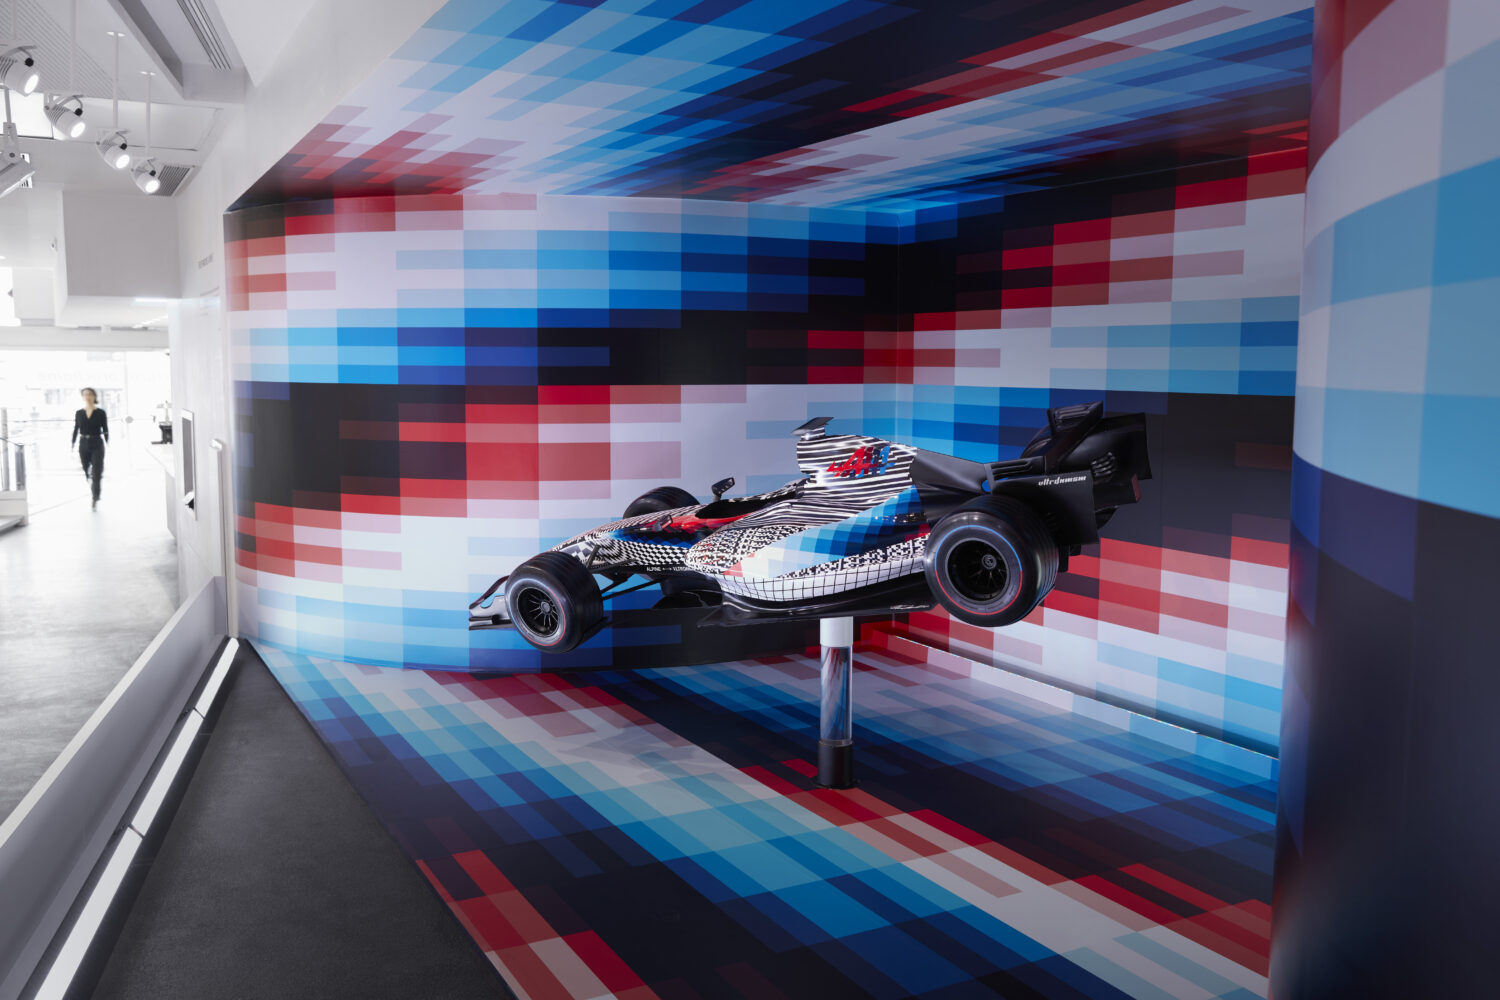 2021 - Felipe Pantone x Alpine F1 Collaboration